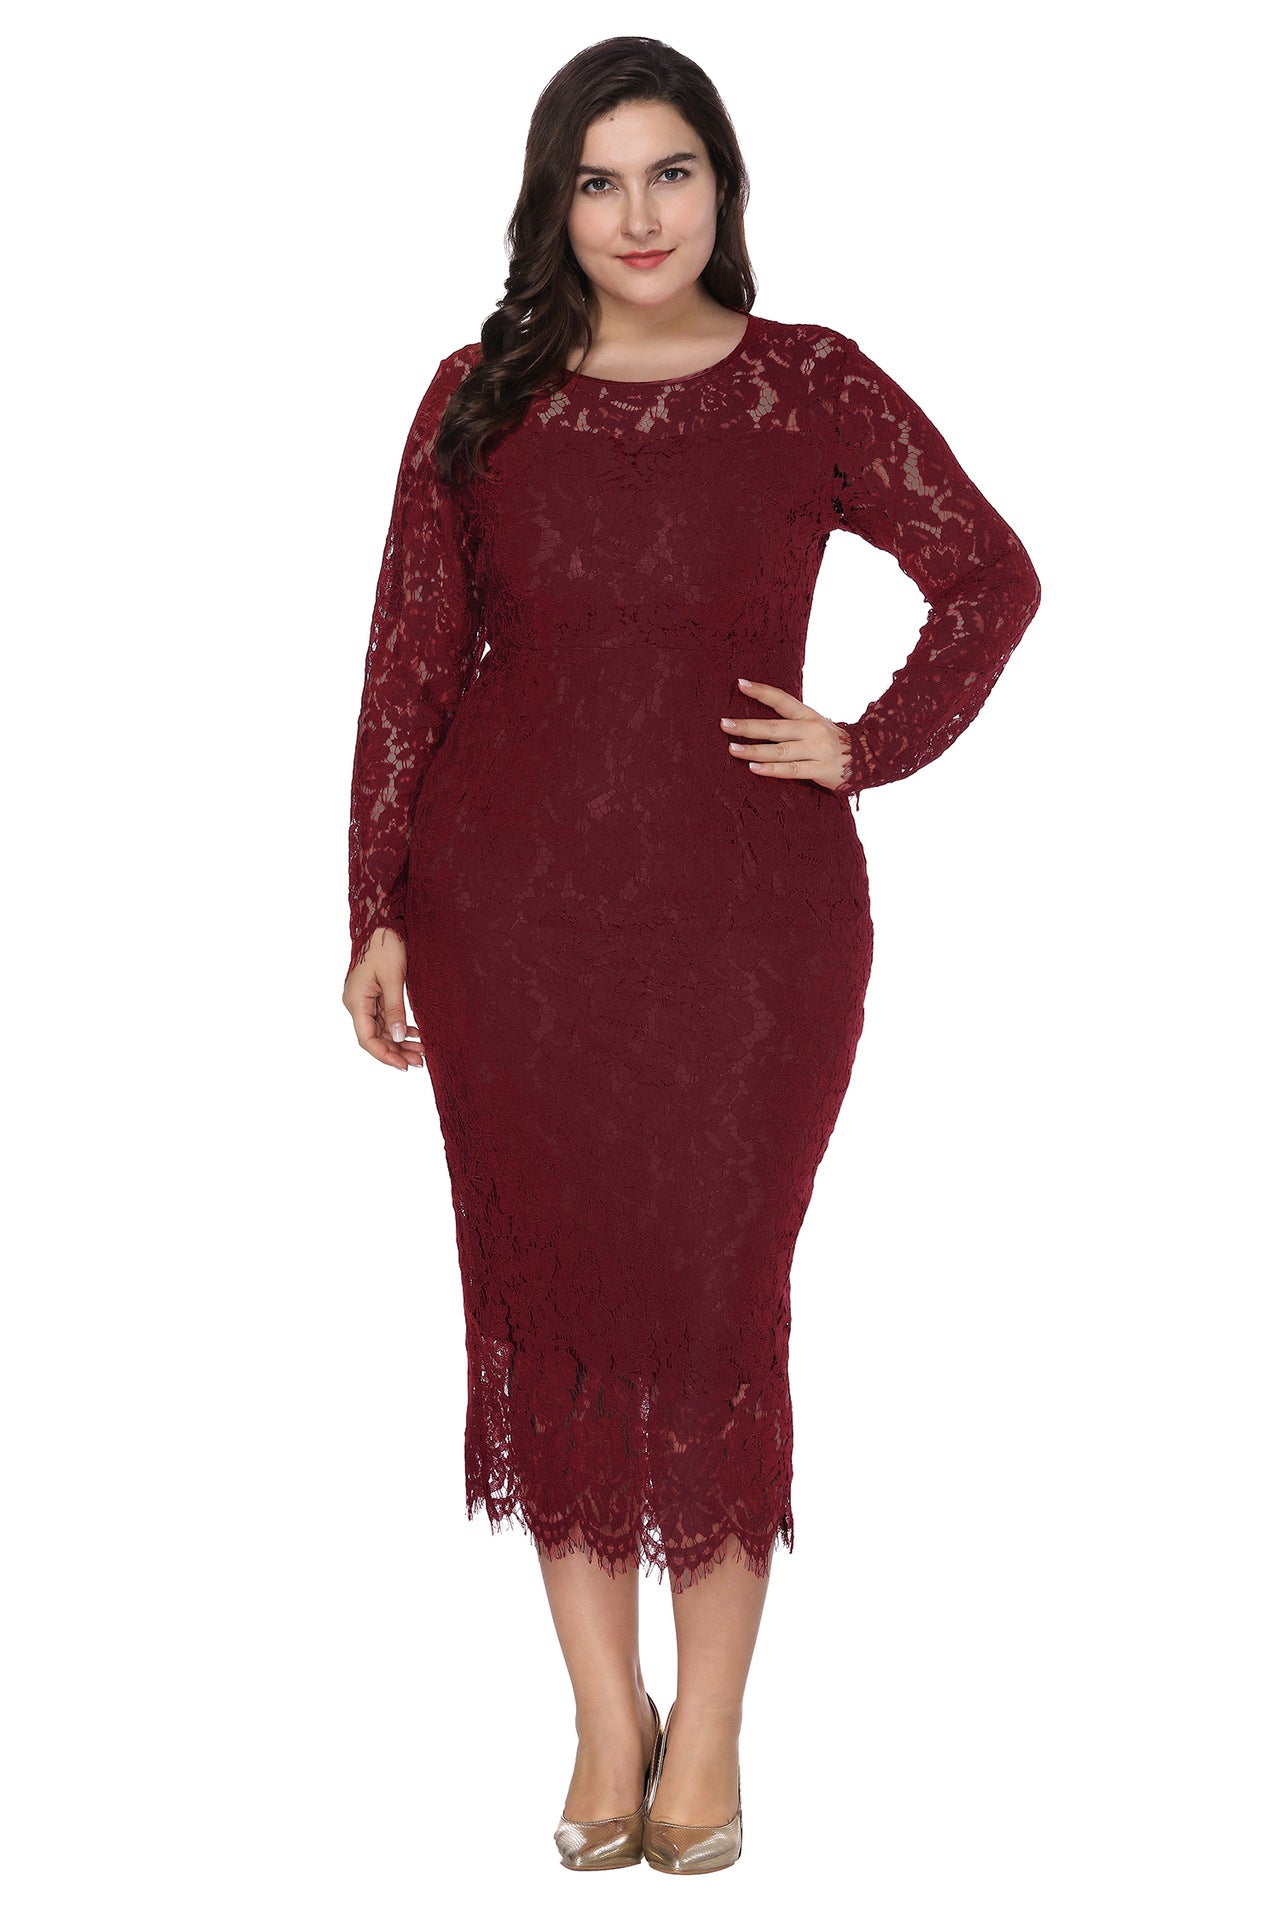 Plus Size Women's Long-sleeved Lace Dress  dresses Thecurvestory